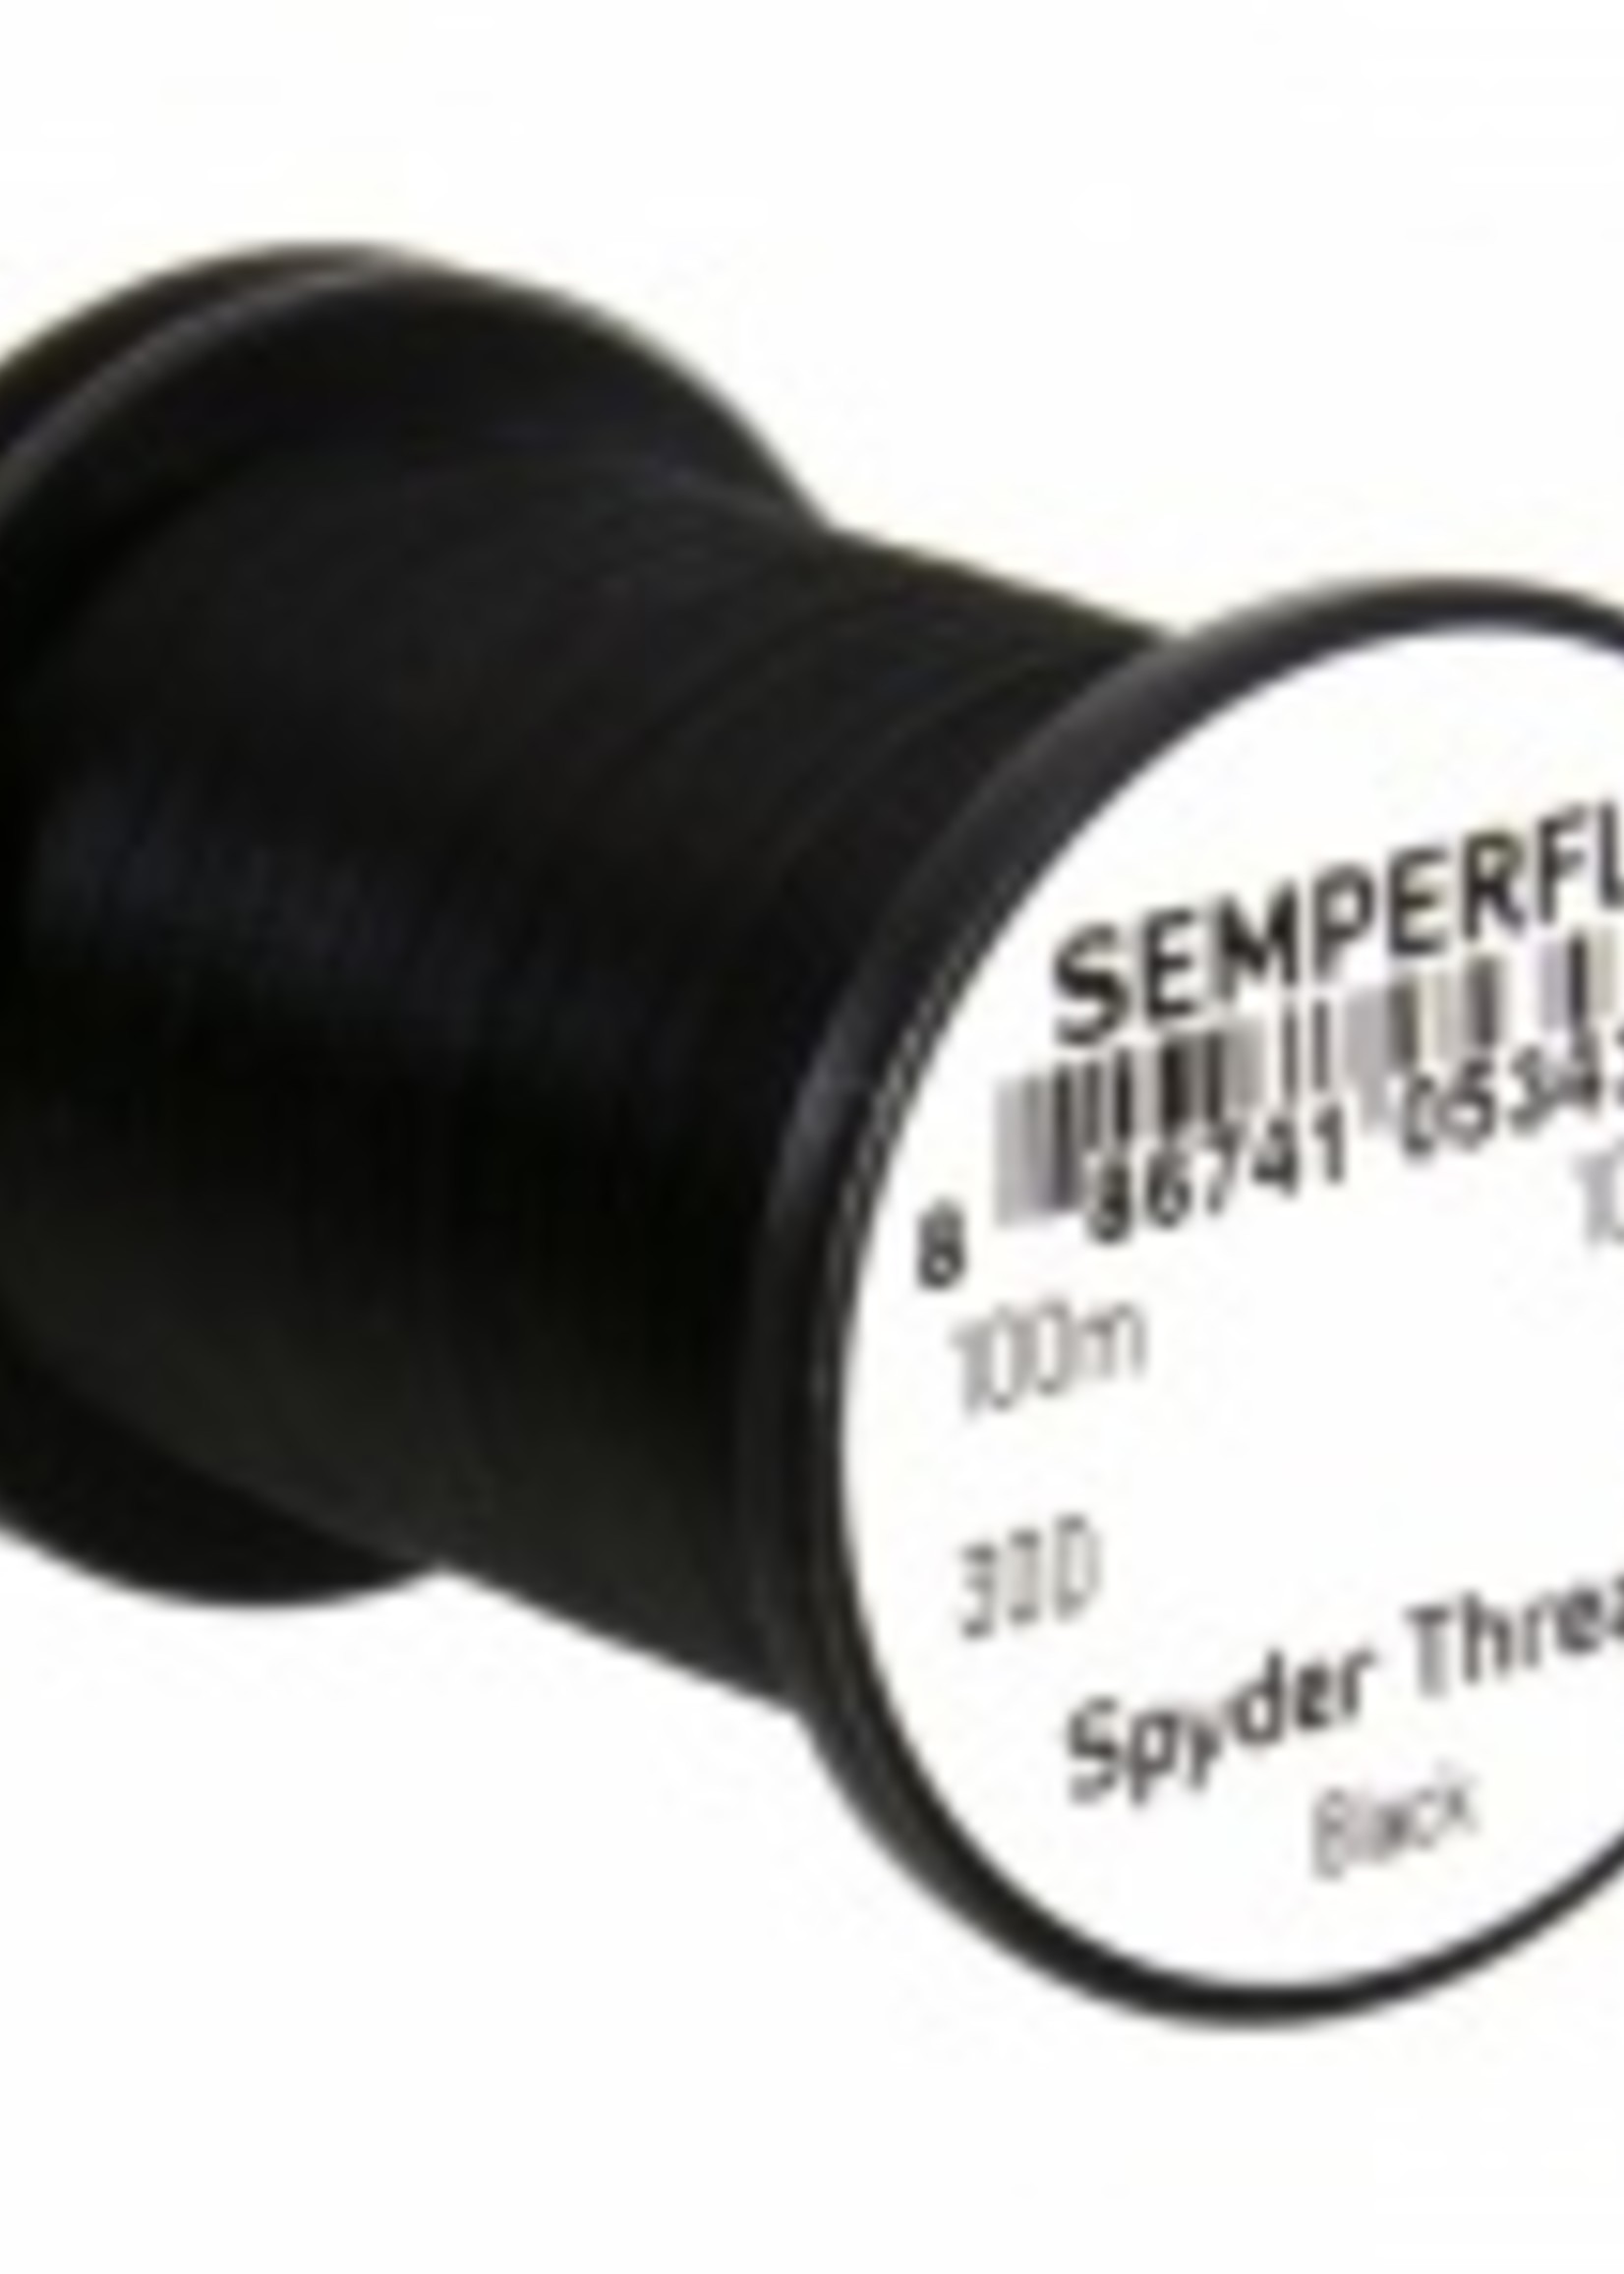 Semperfli Spyder Thread - Great Feathers